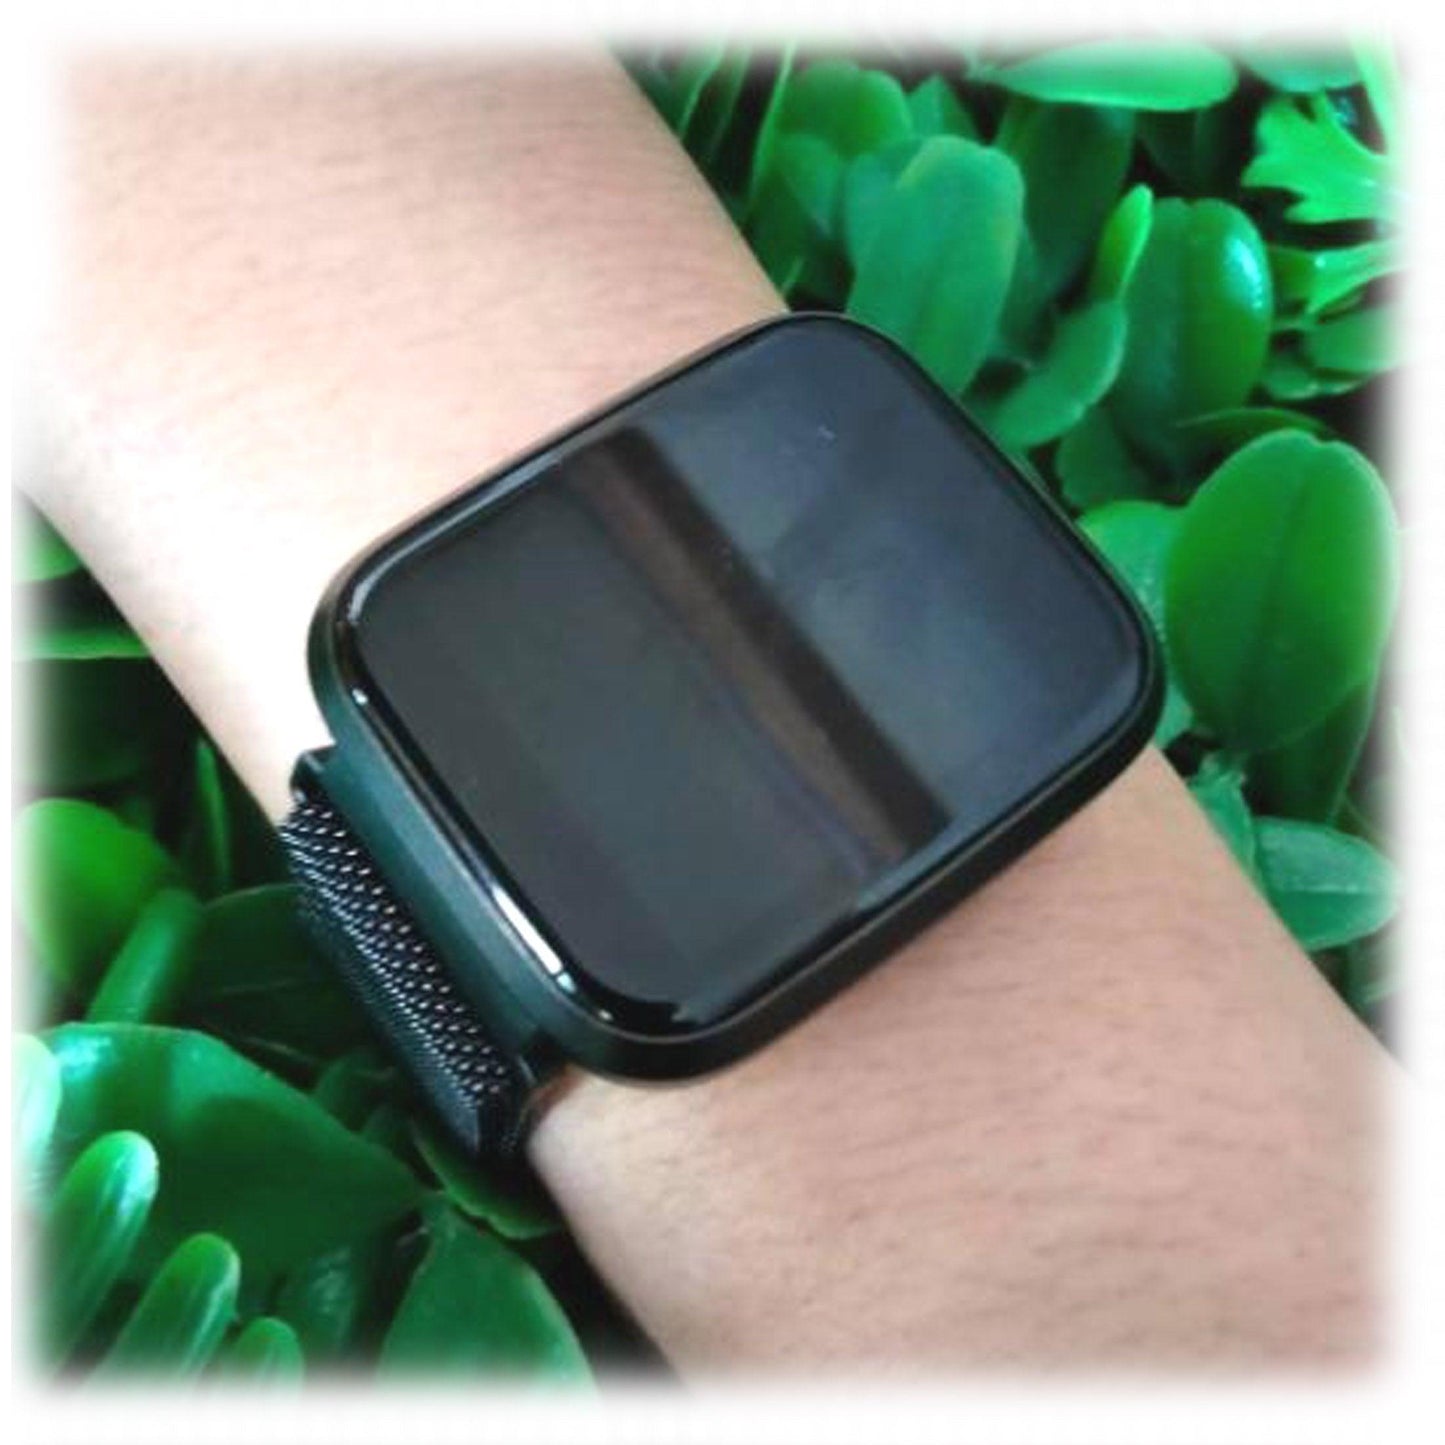 DGTEC 1.4" IPS Smart Fitness Watch with Wireless Earbuds Bundle Black